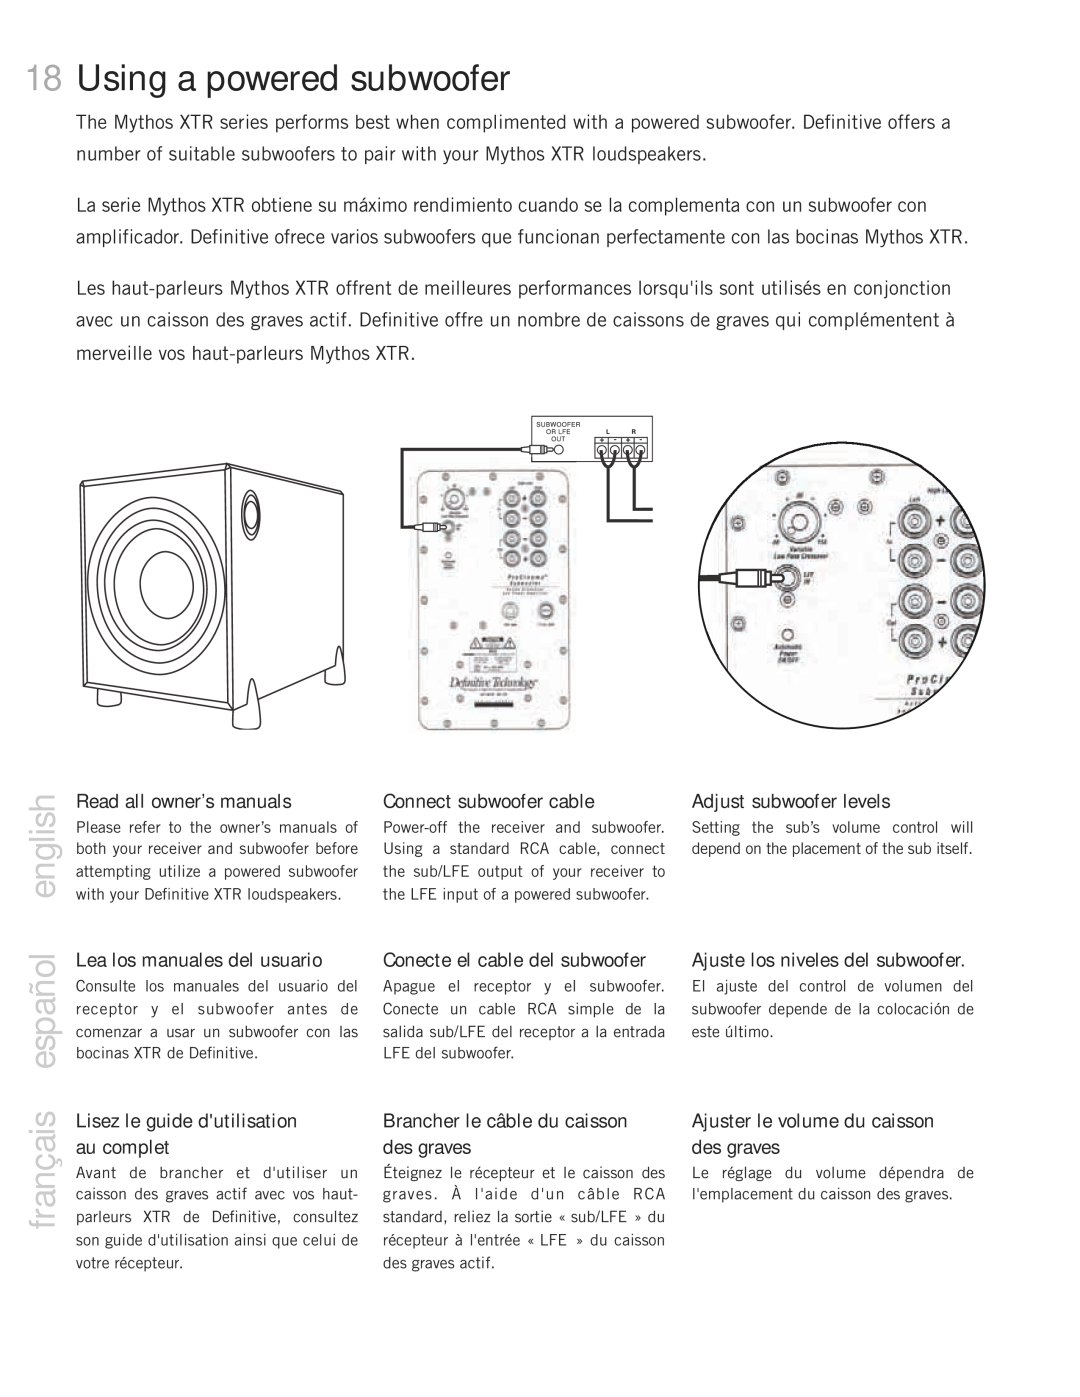 Definitive Technology 40, 60, 20BP, 50, Mythos XTR Loudspeaker System Using a powered subwoofer, français español english 